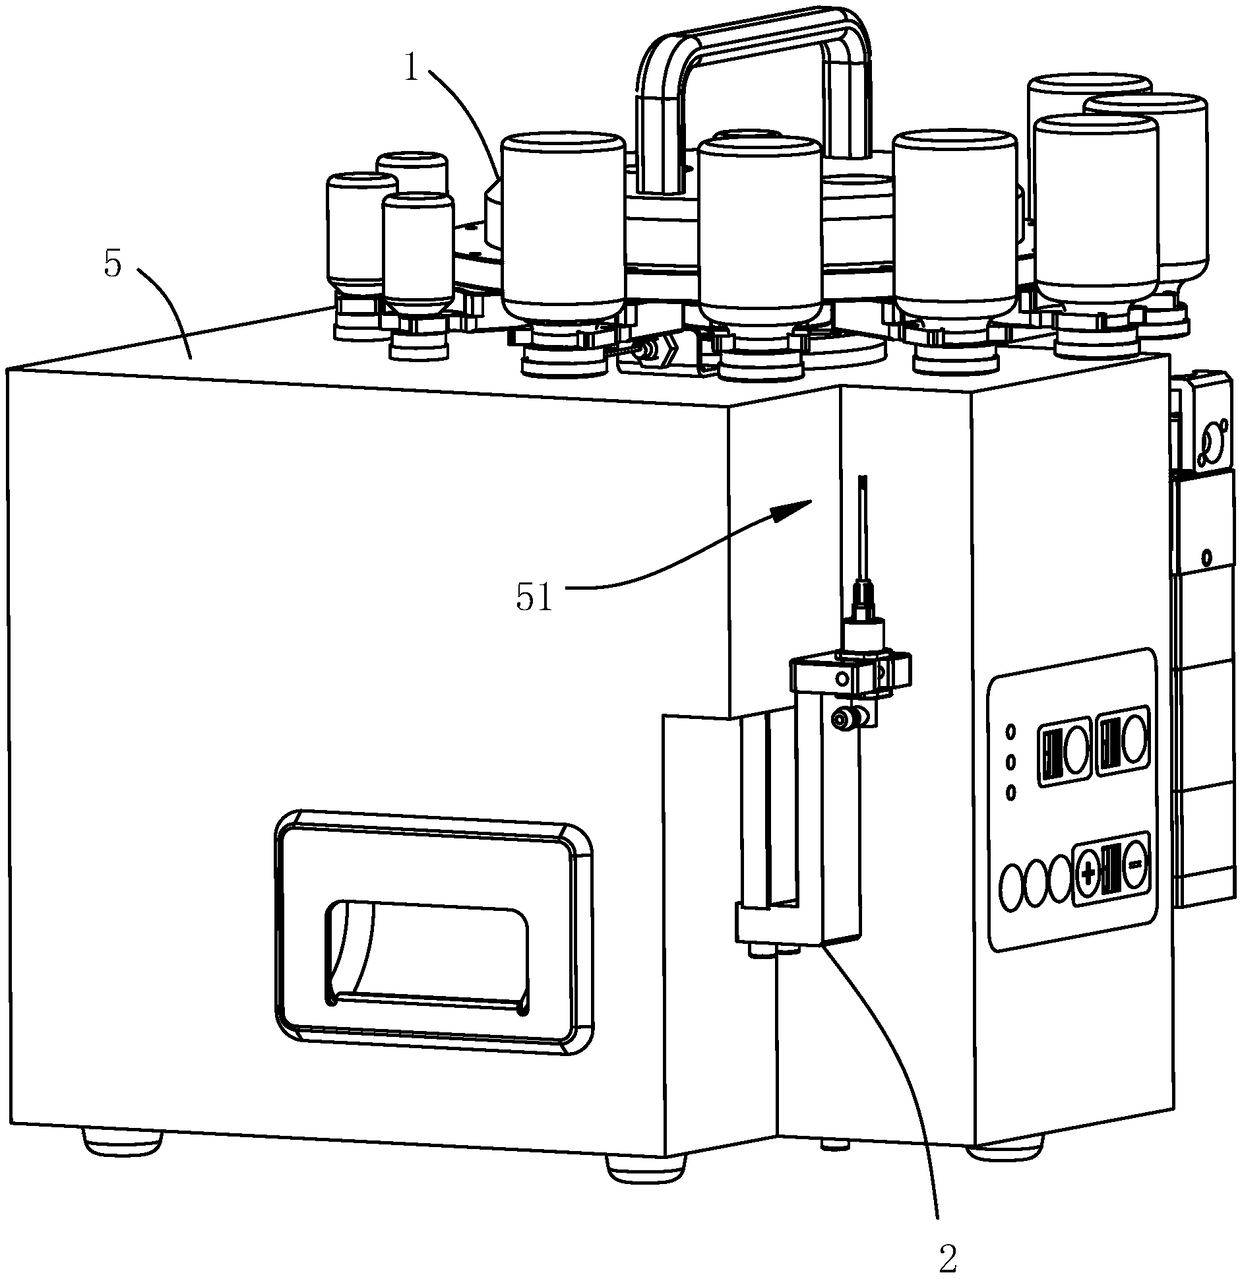 Automatic medicine dispensing machine for penicillin bottles